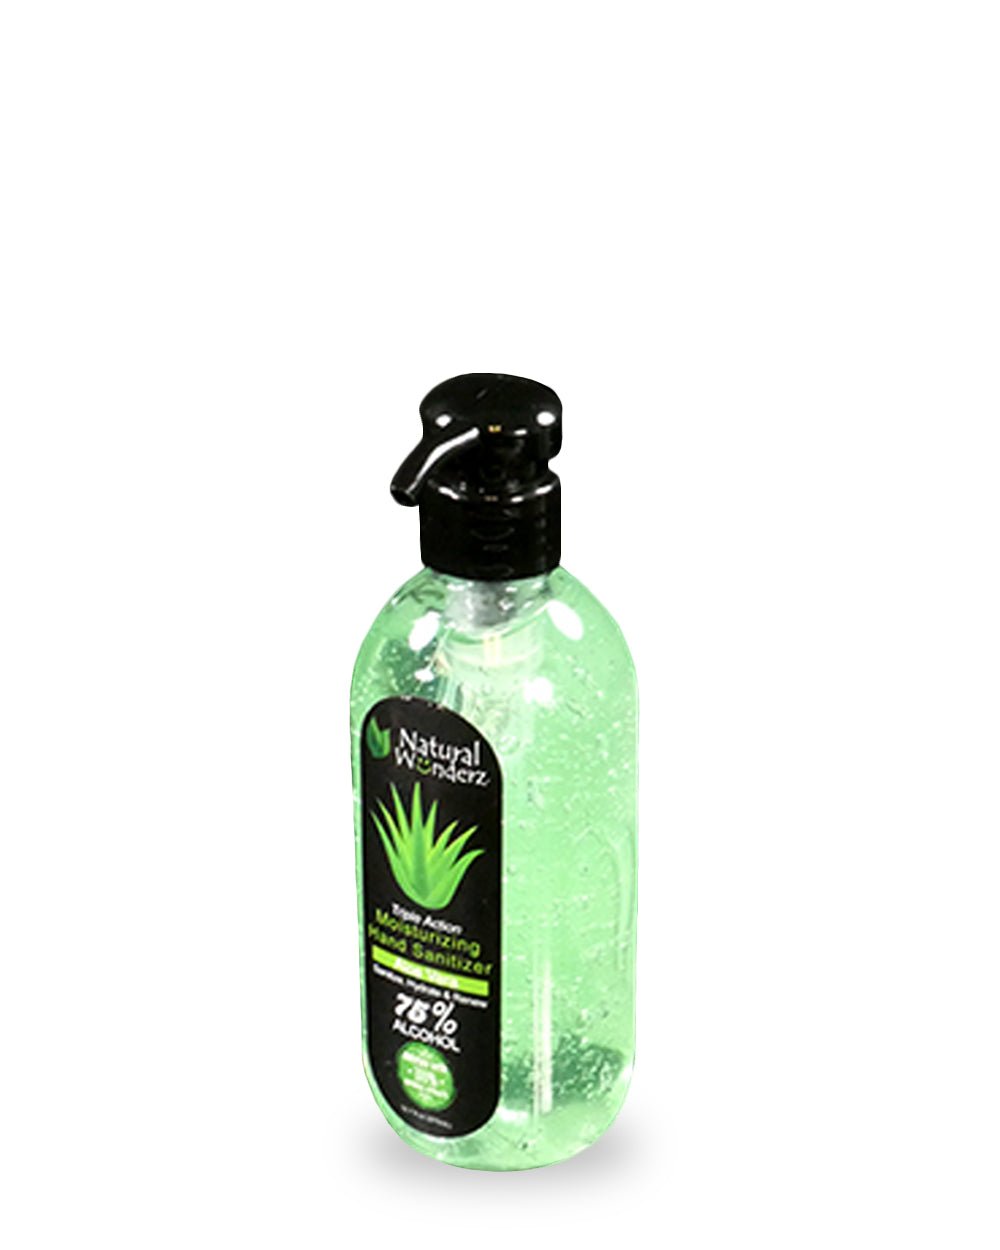 NATURAL WUNDERZ | Natural Extract Moisturizing Hand Sanitizer with Aloe Vera - 12oz - 1